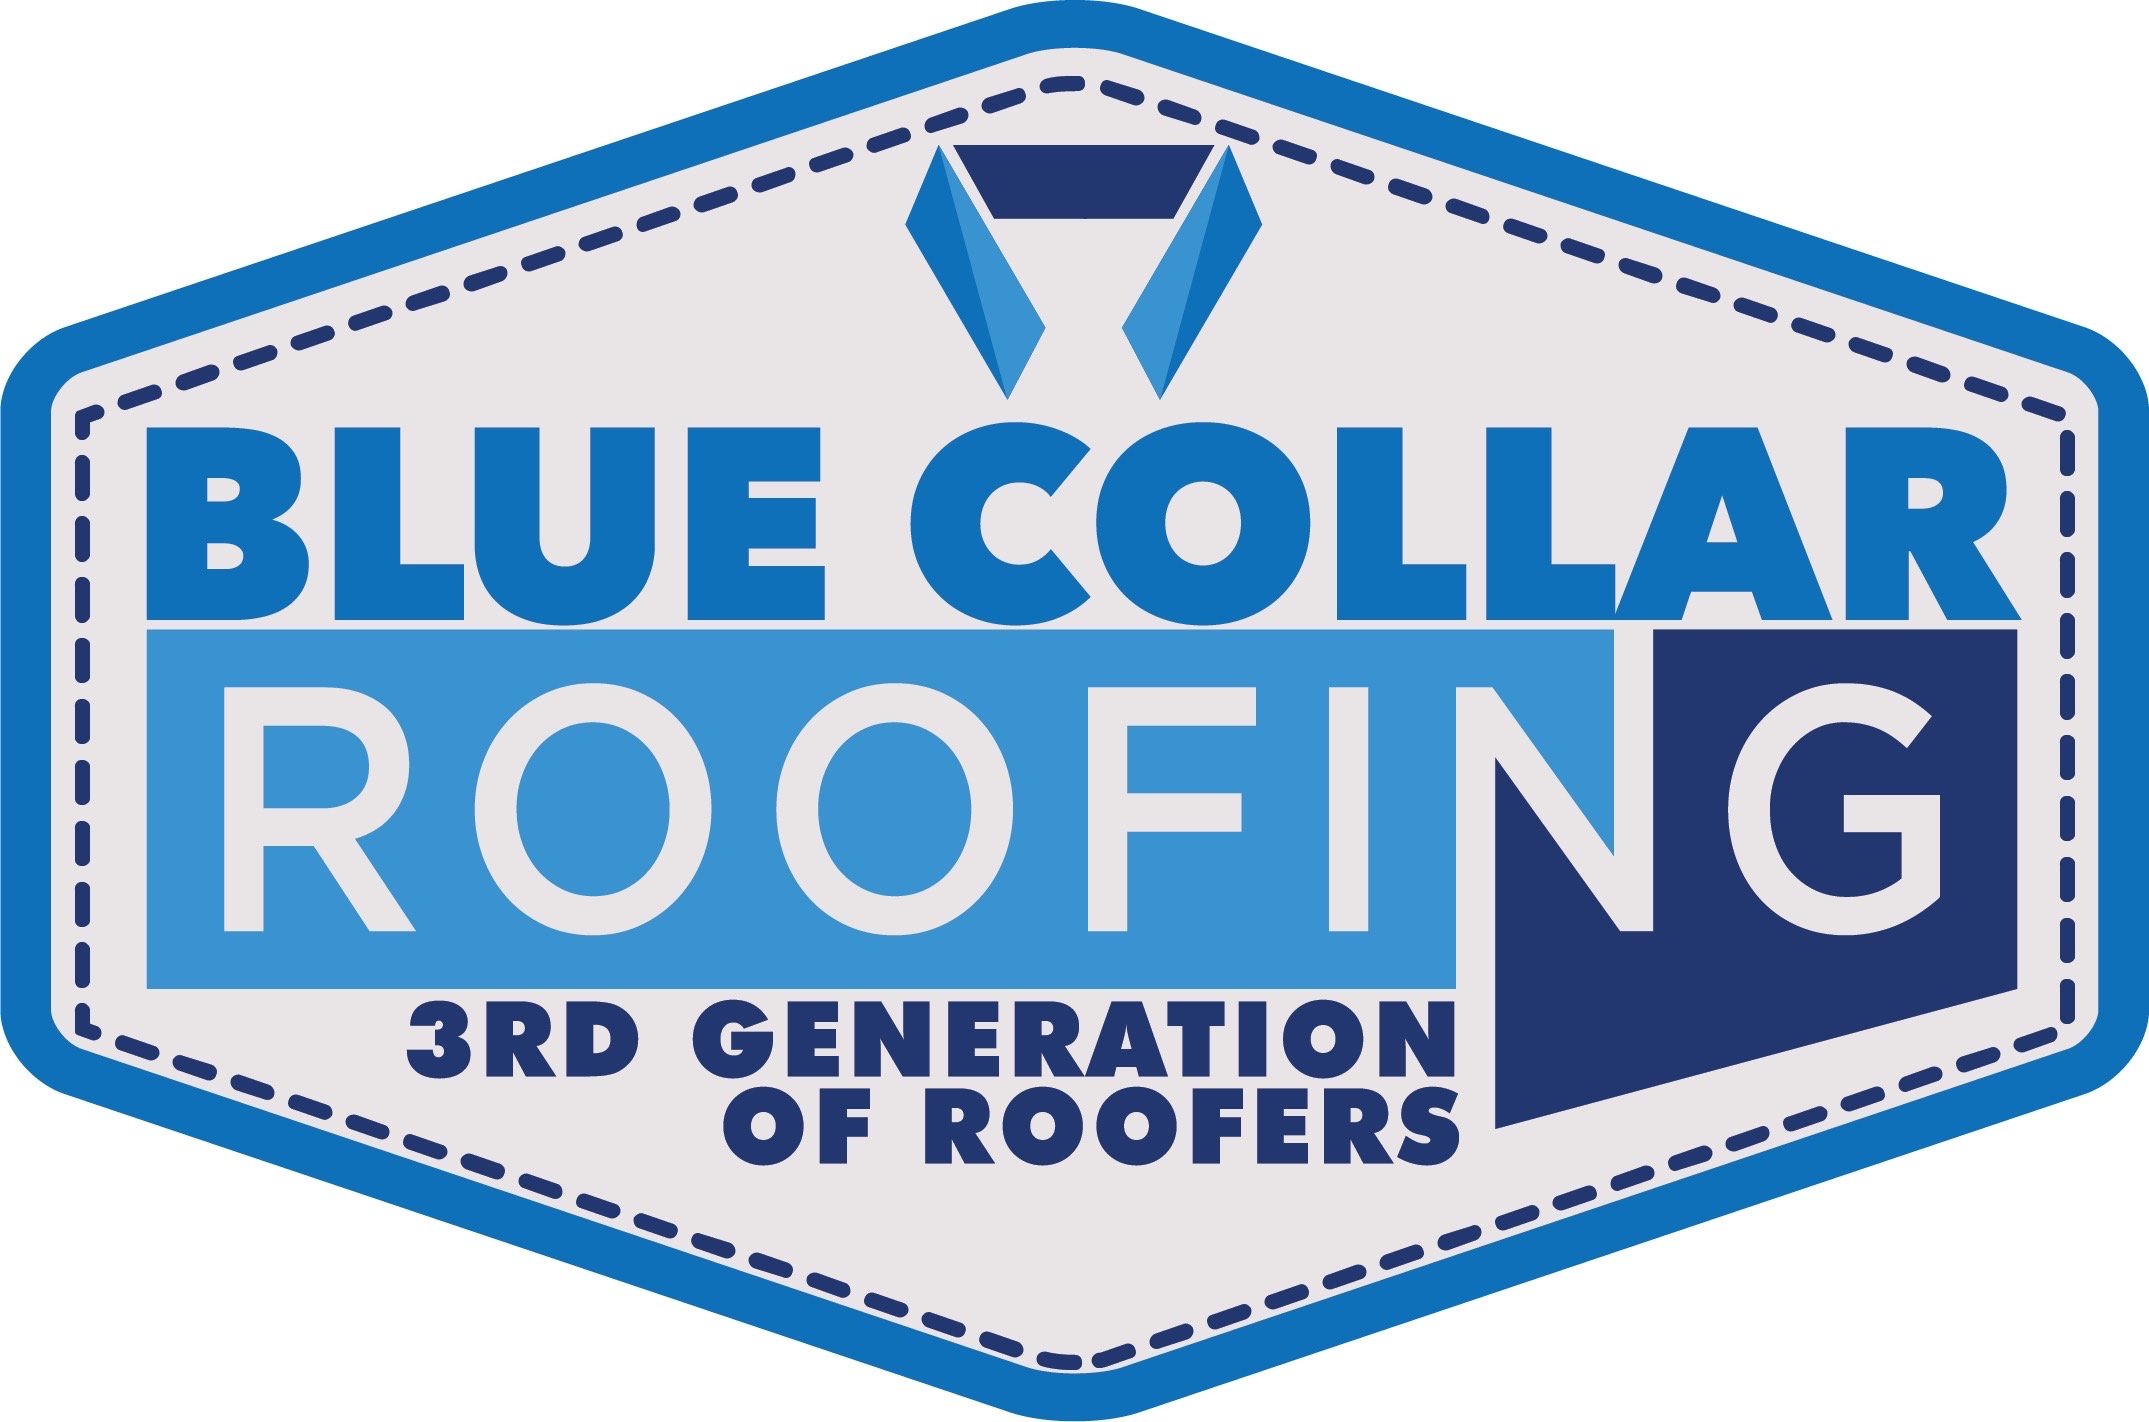 Blue Collar roofing stick sign sponsor.jpg